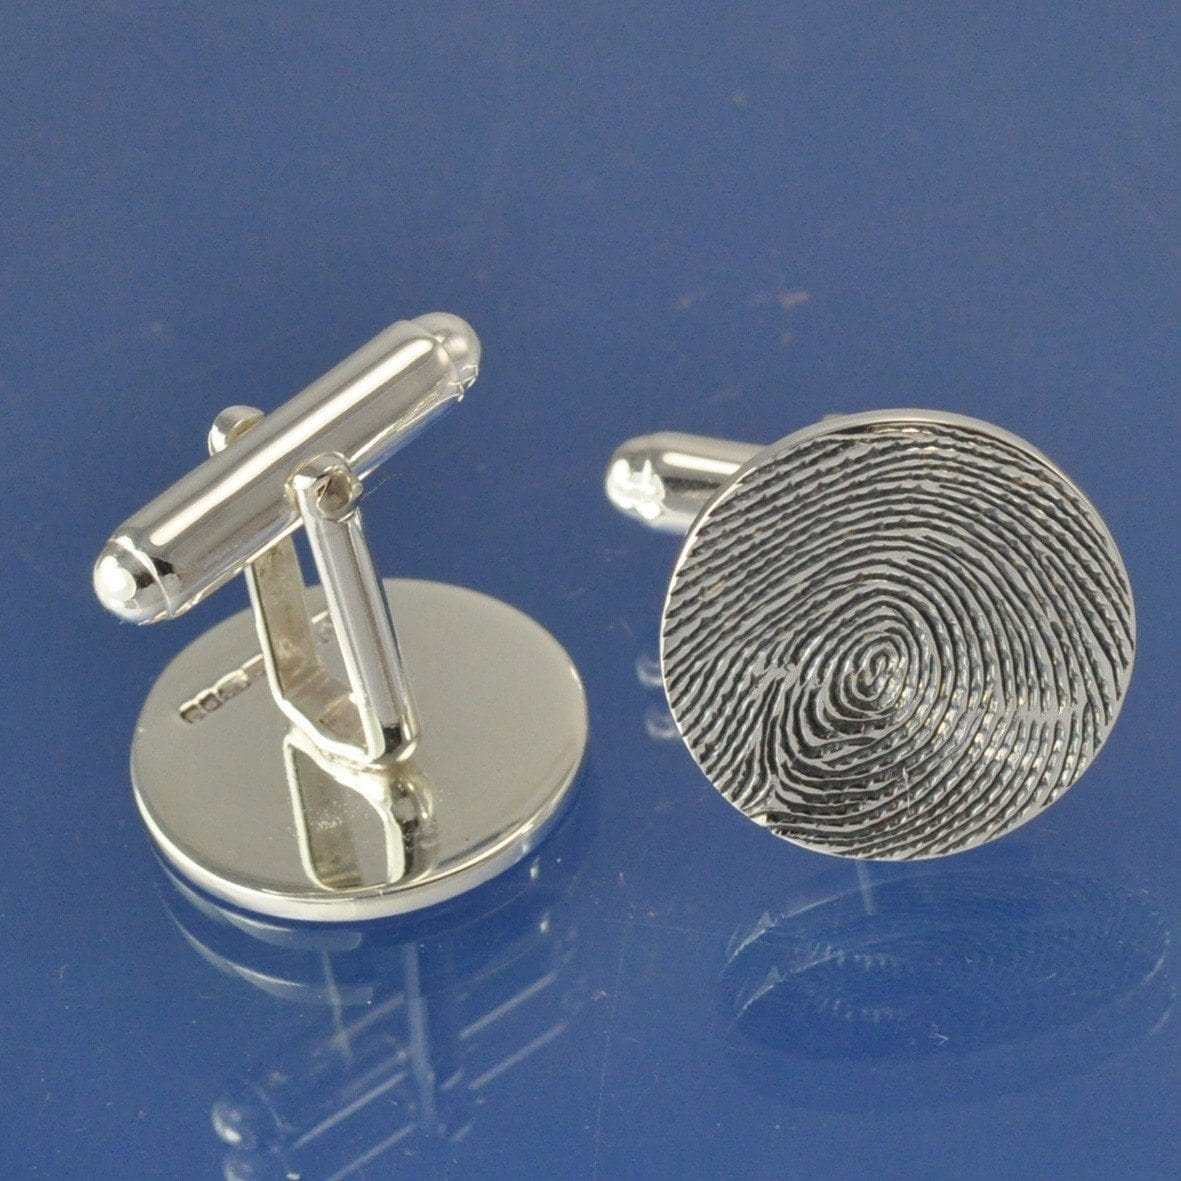 Fingerprint Cufflinks - Round Cufflinks by Chris Parry Jewellery